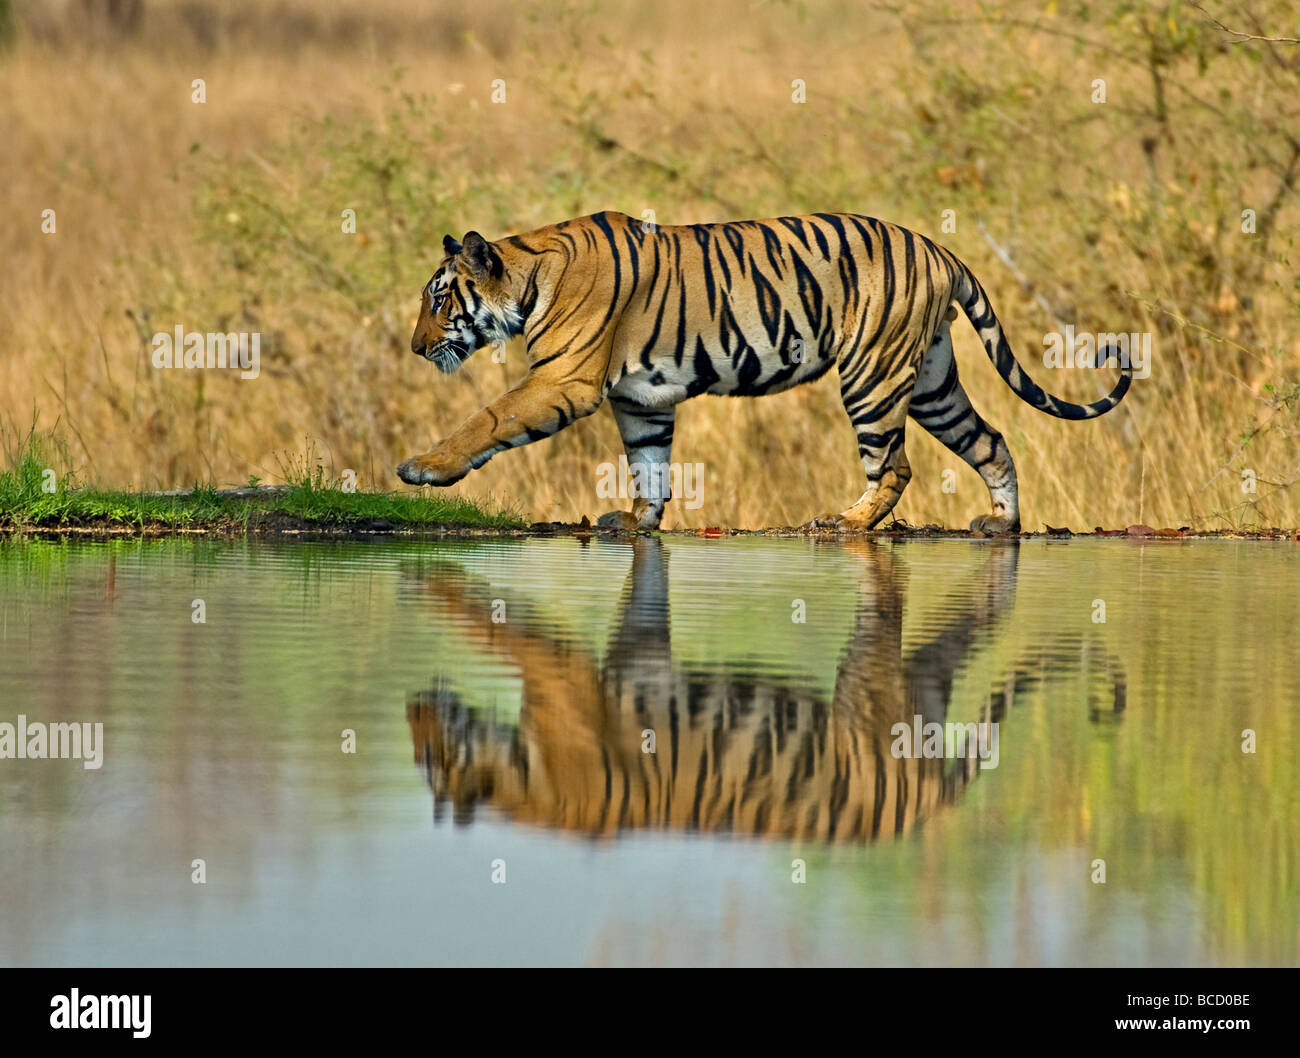 Tigre de Bengala (Panthera tigris tigris) macho en el lago. Bandhavgarh. La India Foto de stock